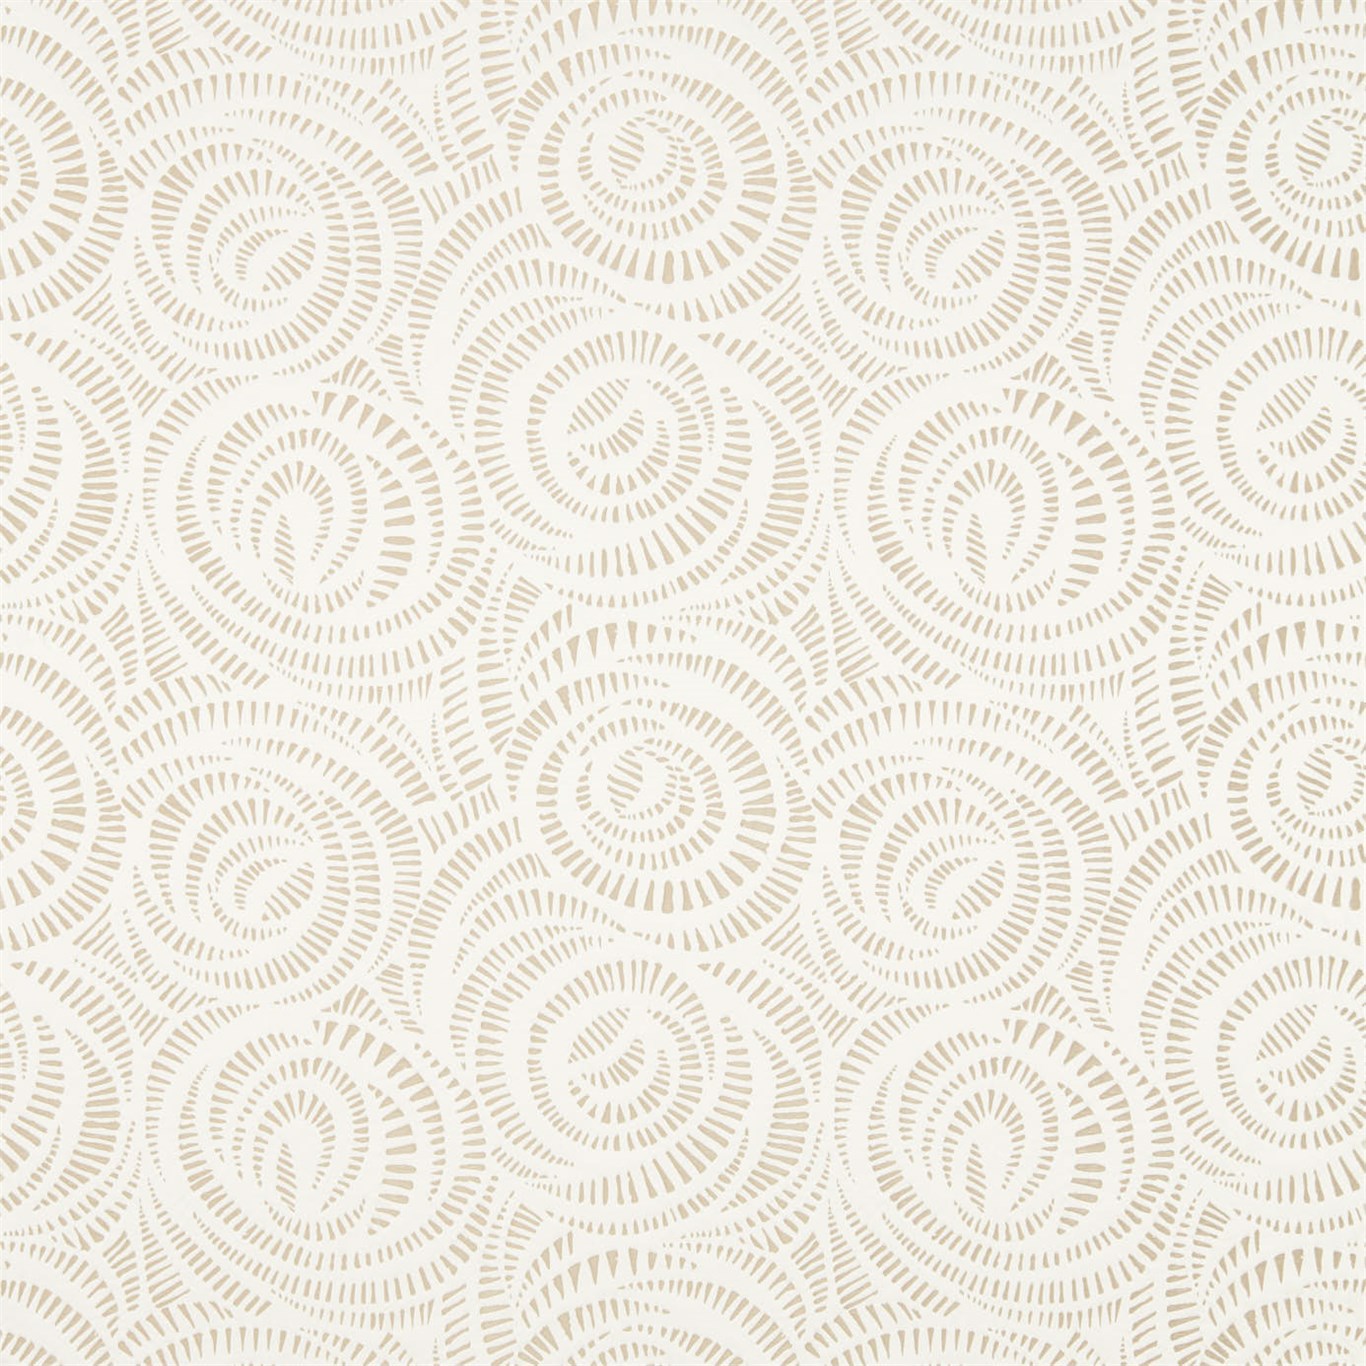 Fractal Flax Fabric by HAR